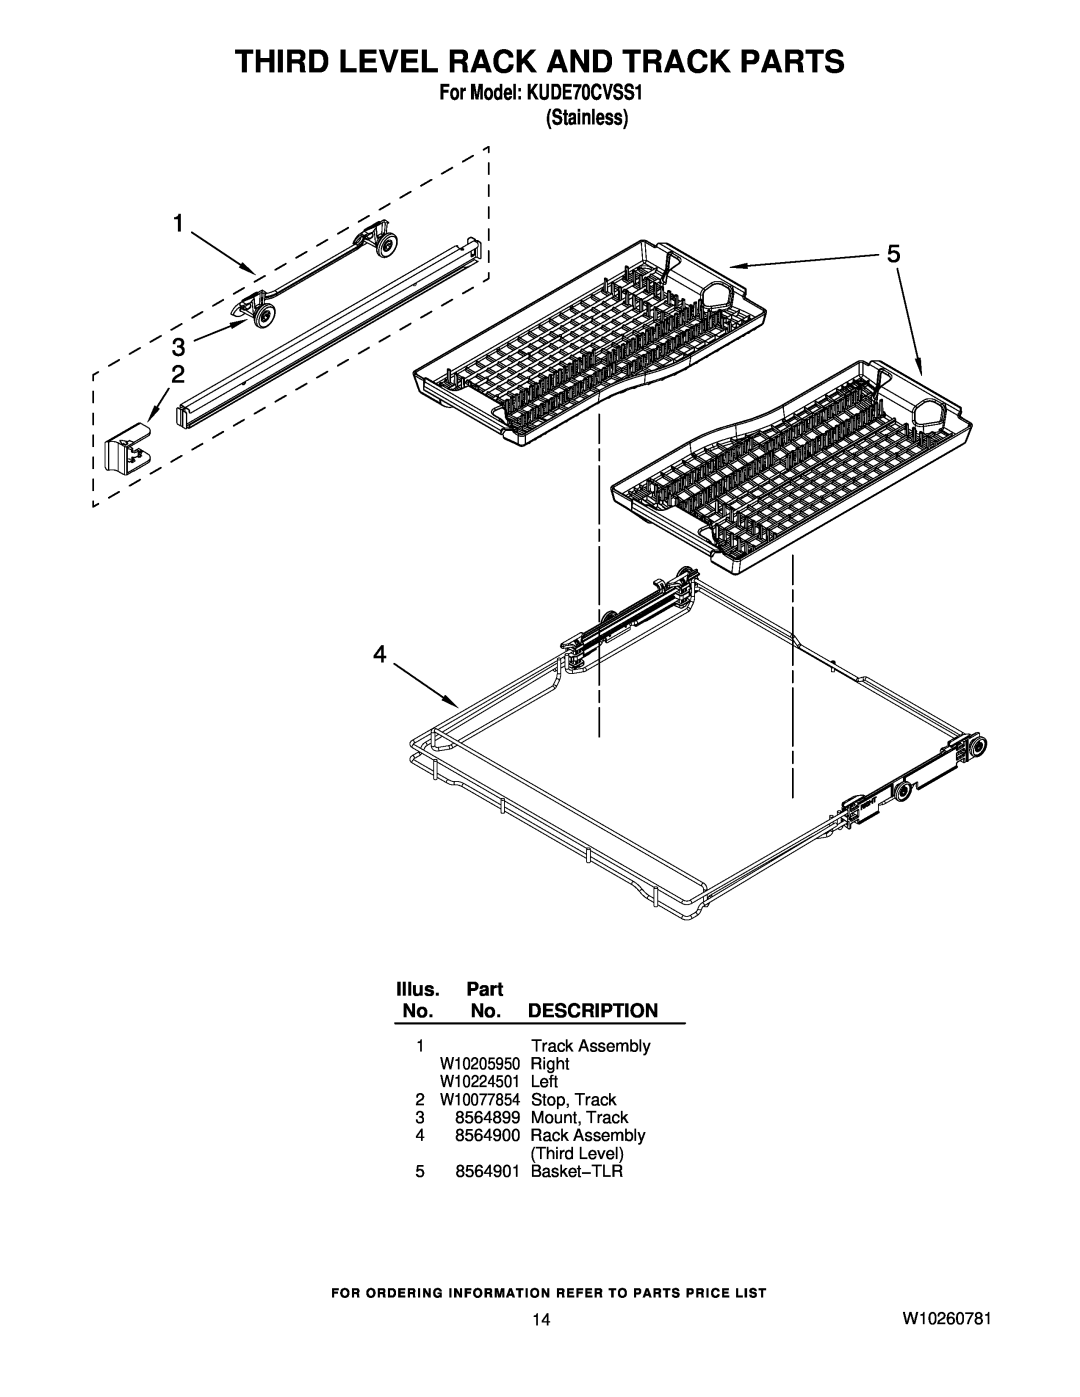 KitchenAid manual Third Level Rack And Track Parts, Illus. Part No. No. DESCRIPTION, For Model KUDE70CVSS1 Stainless 